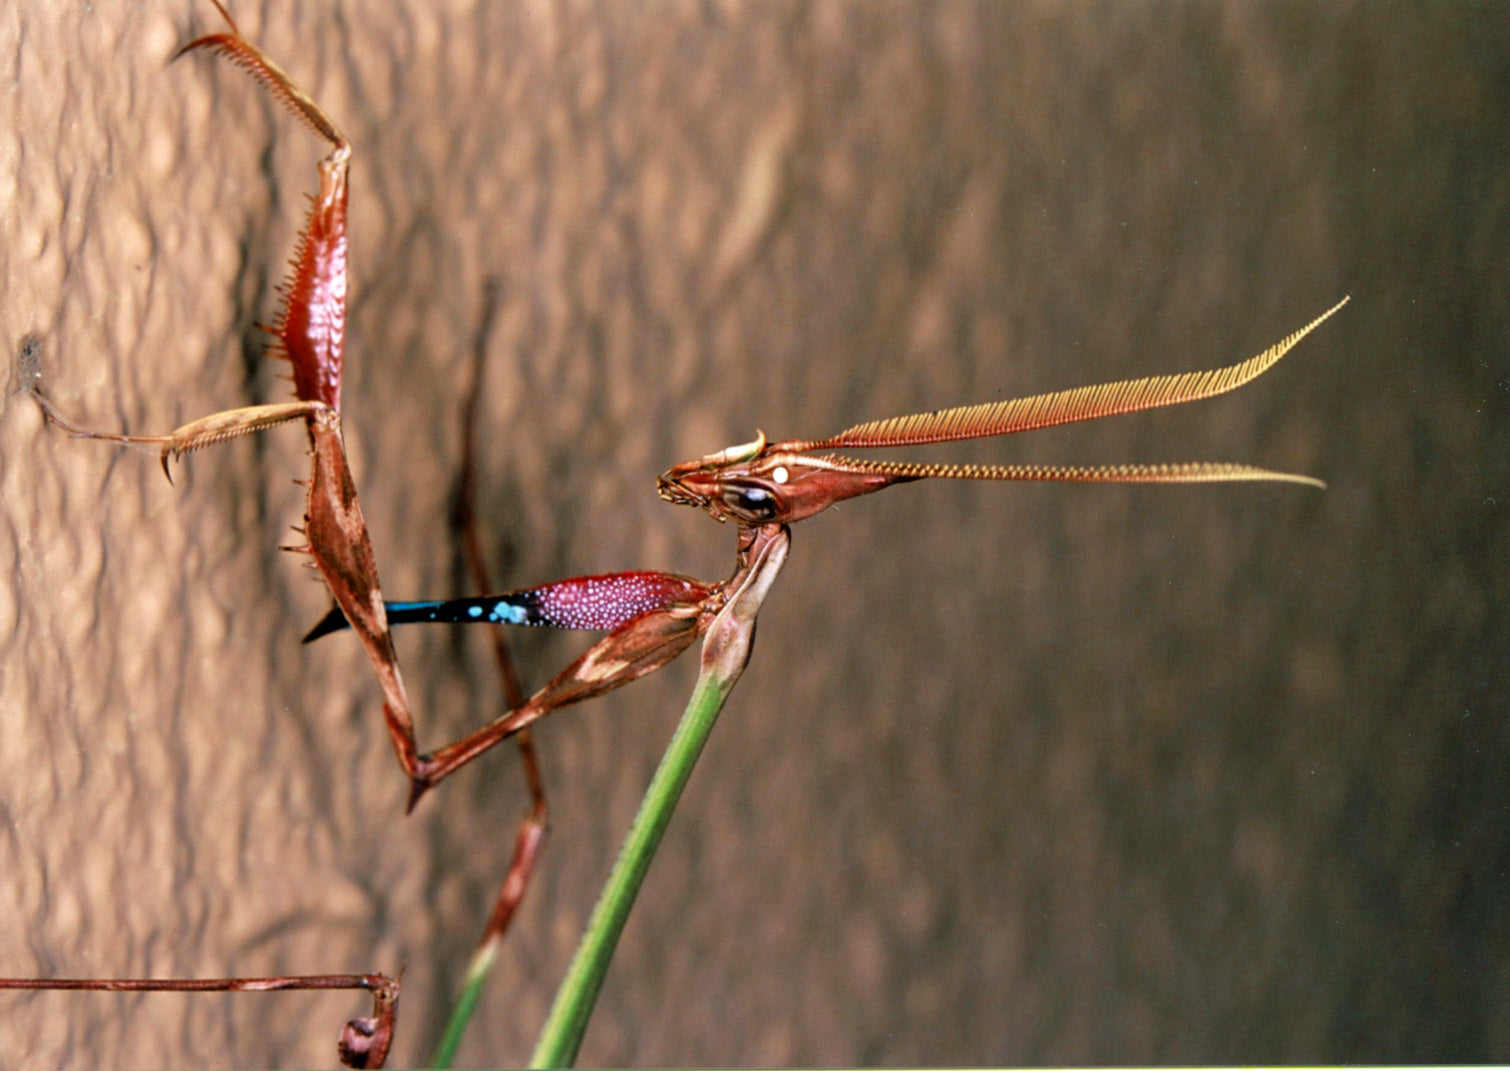 Idolomorpha lateralis "Alien head mantis" for sale - USMANTIS